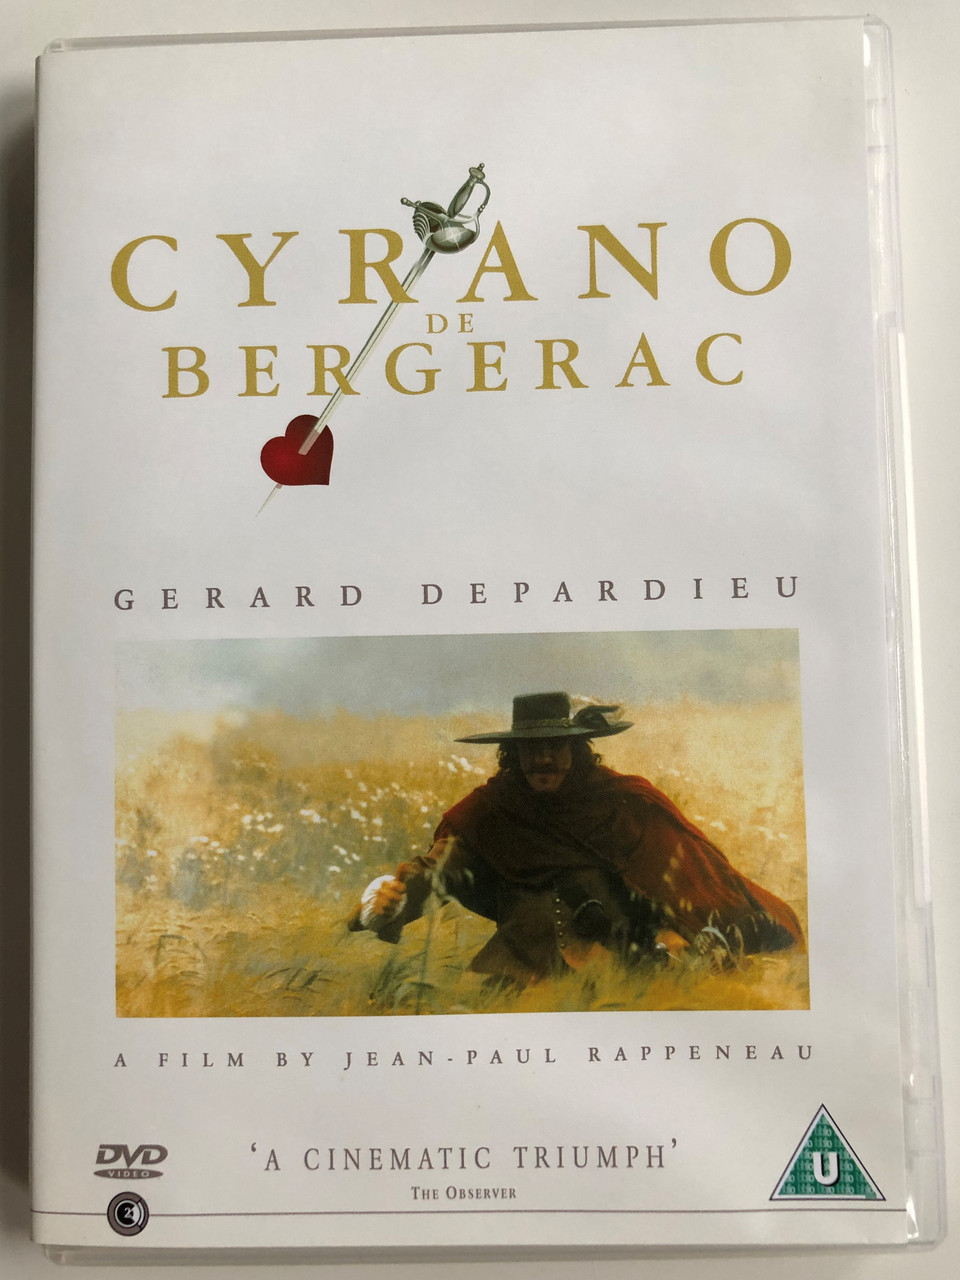 Cyrano de Bergerac (1990) DVD / Directed by Jean-Paul Rappeneau / Starring: Gérard  Depardieu, Anne Brochet, Vincent Perez - bibleinmylanguage